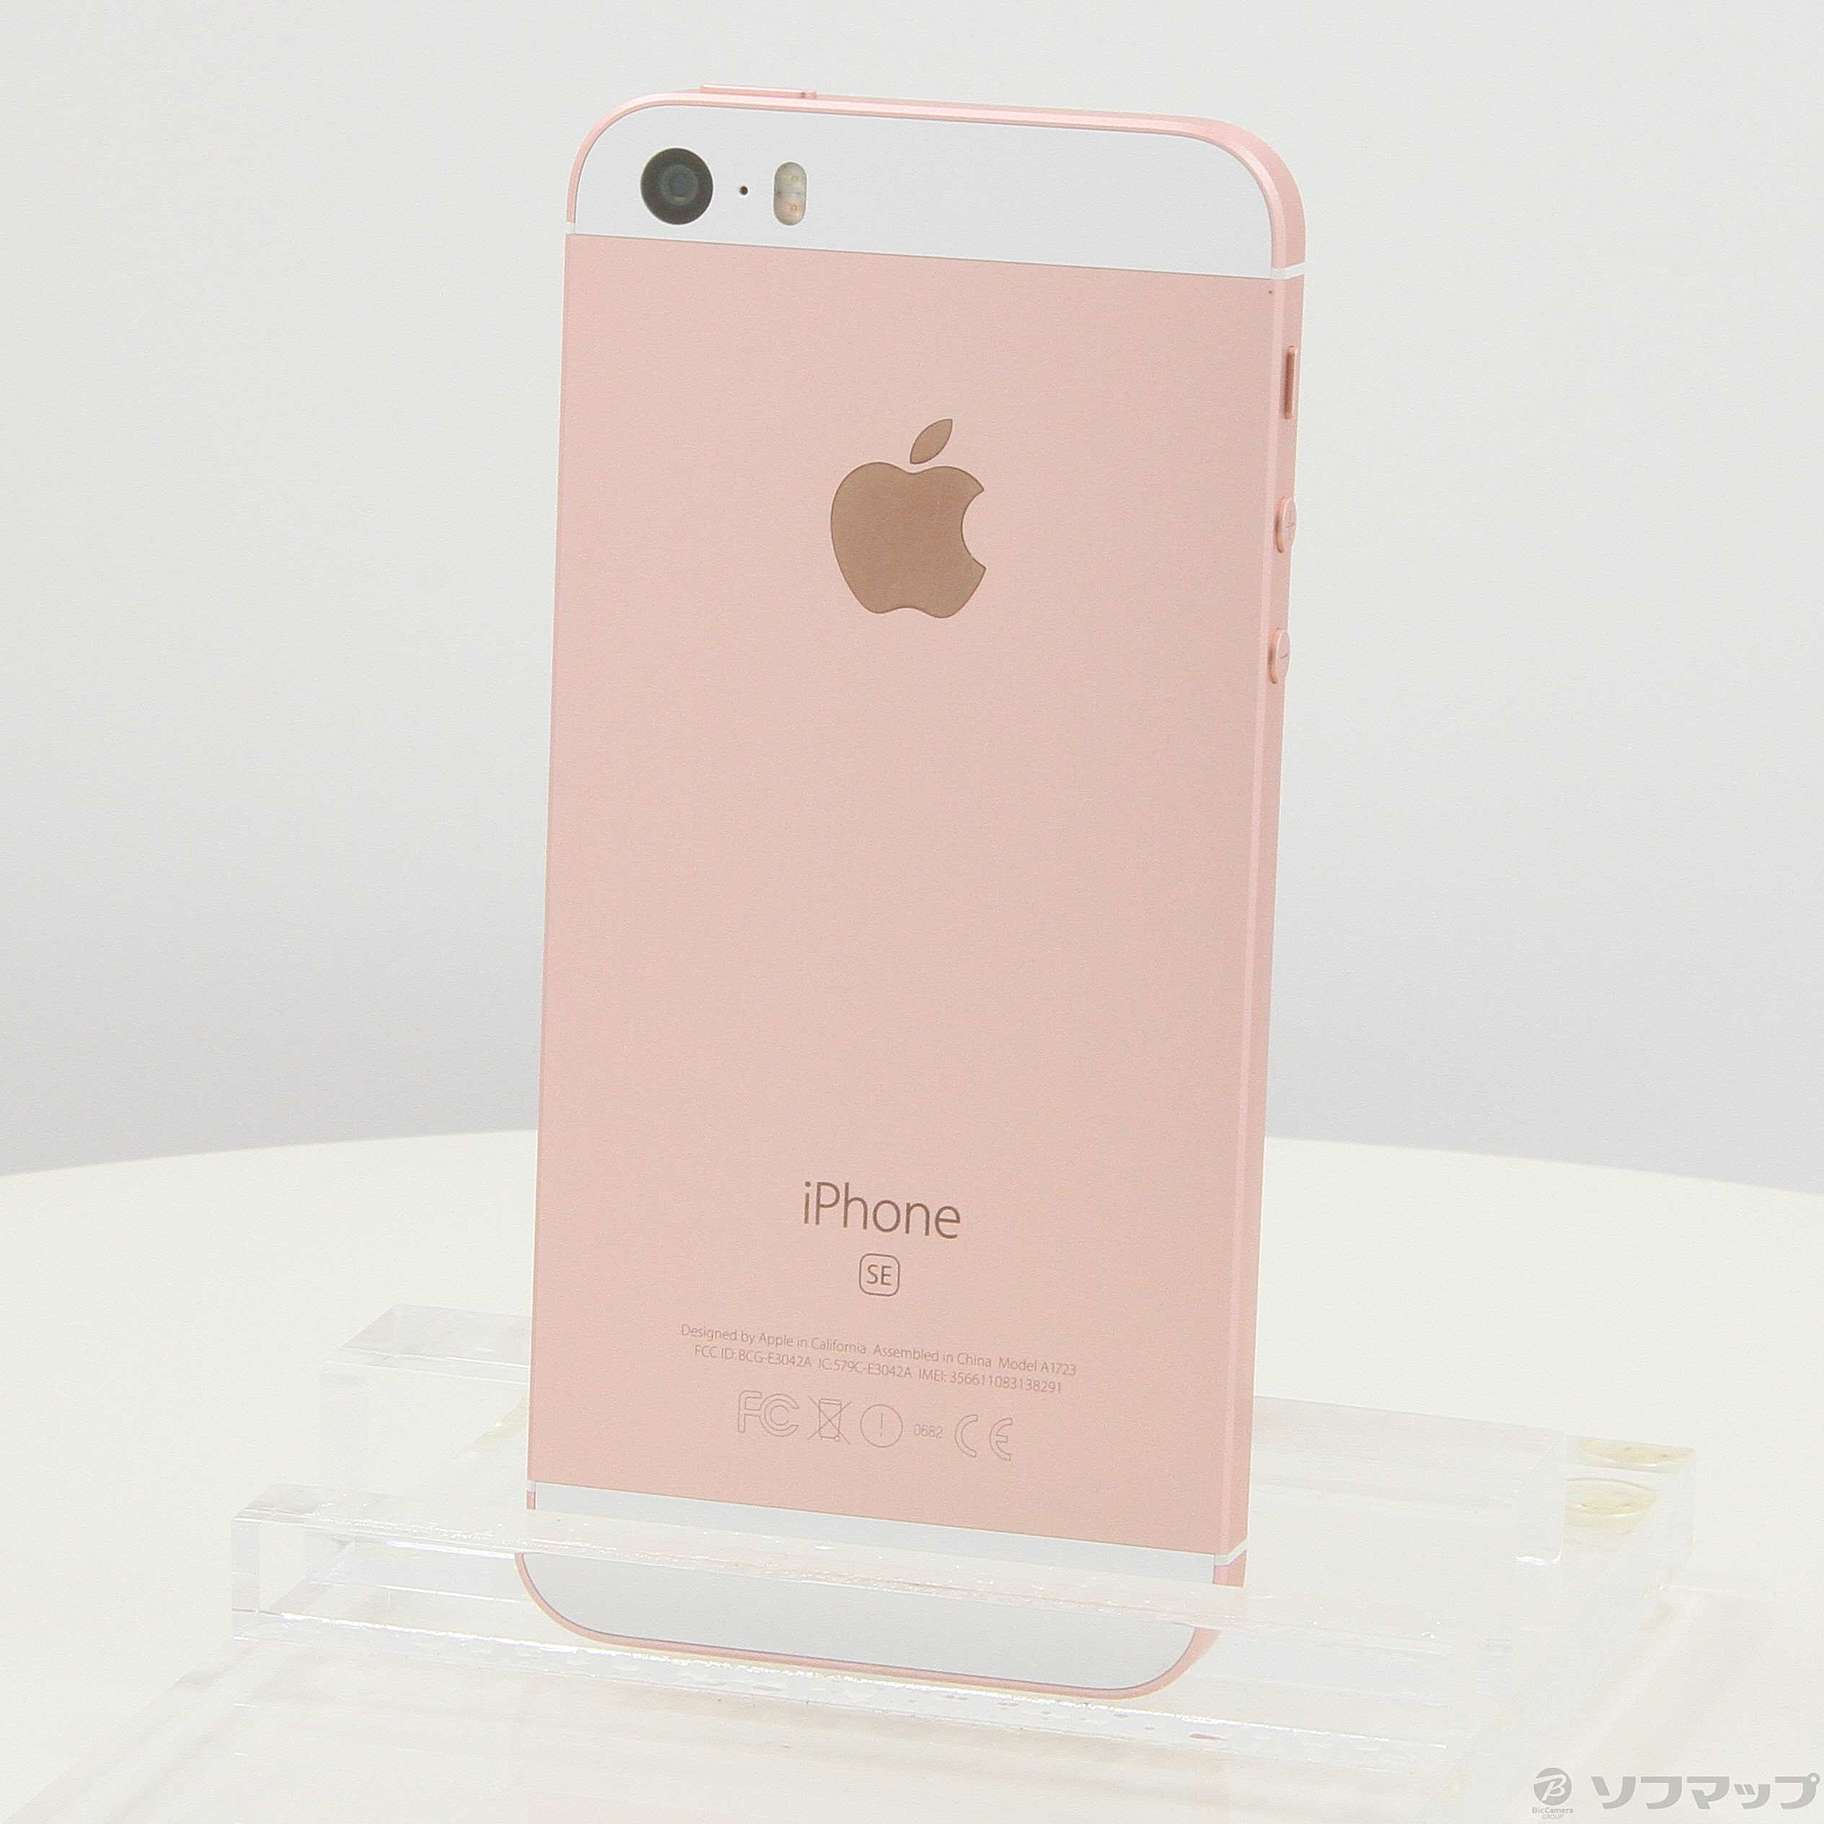 iPhone SE SIMフリー 32GB iPhoneSE ローズゴールド - スマートフォン本体